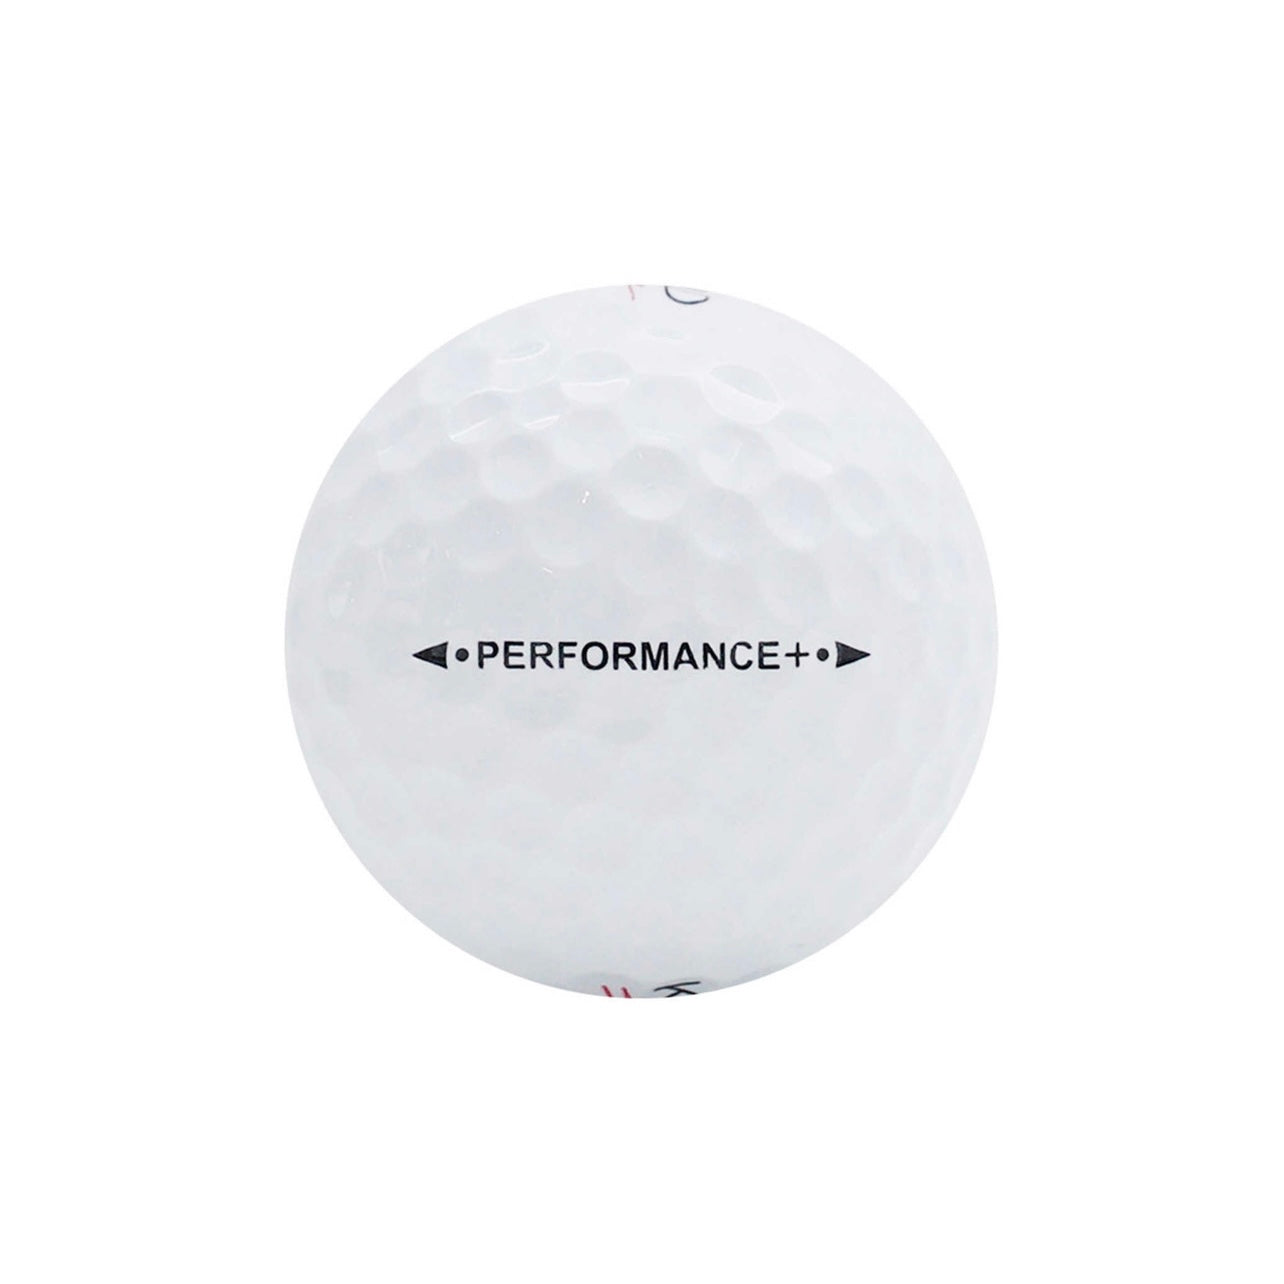 Kirkland-signature-ensemble-3-balles-golf-perfomance+-ball-3